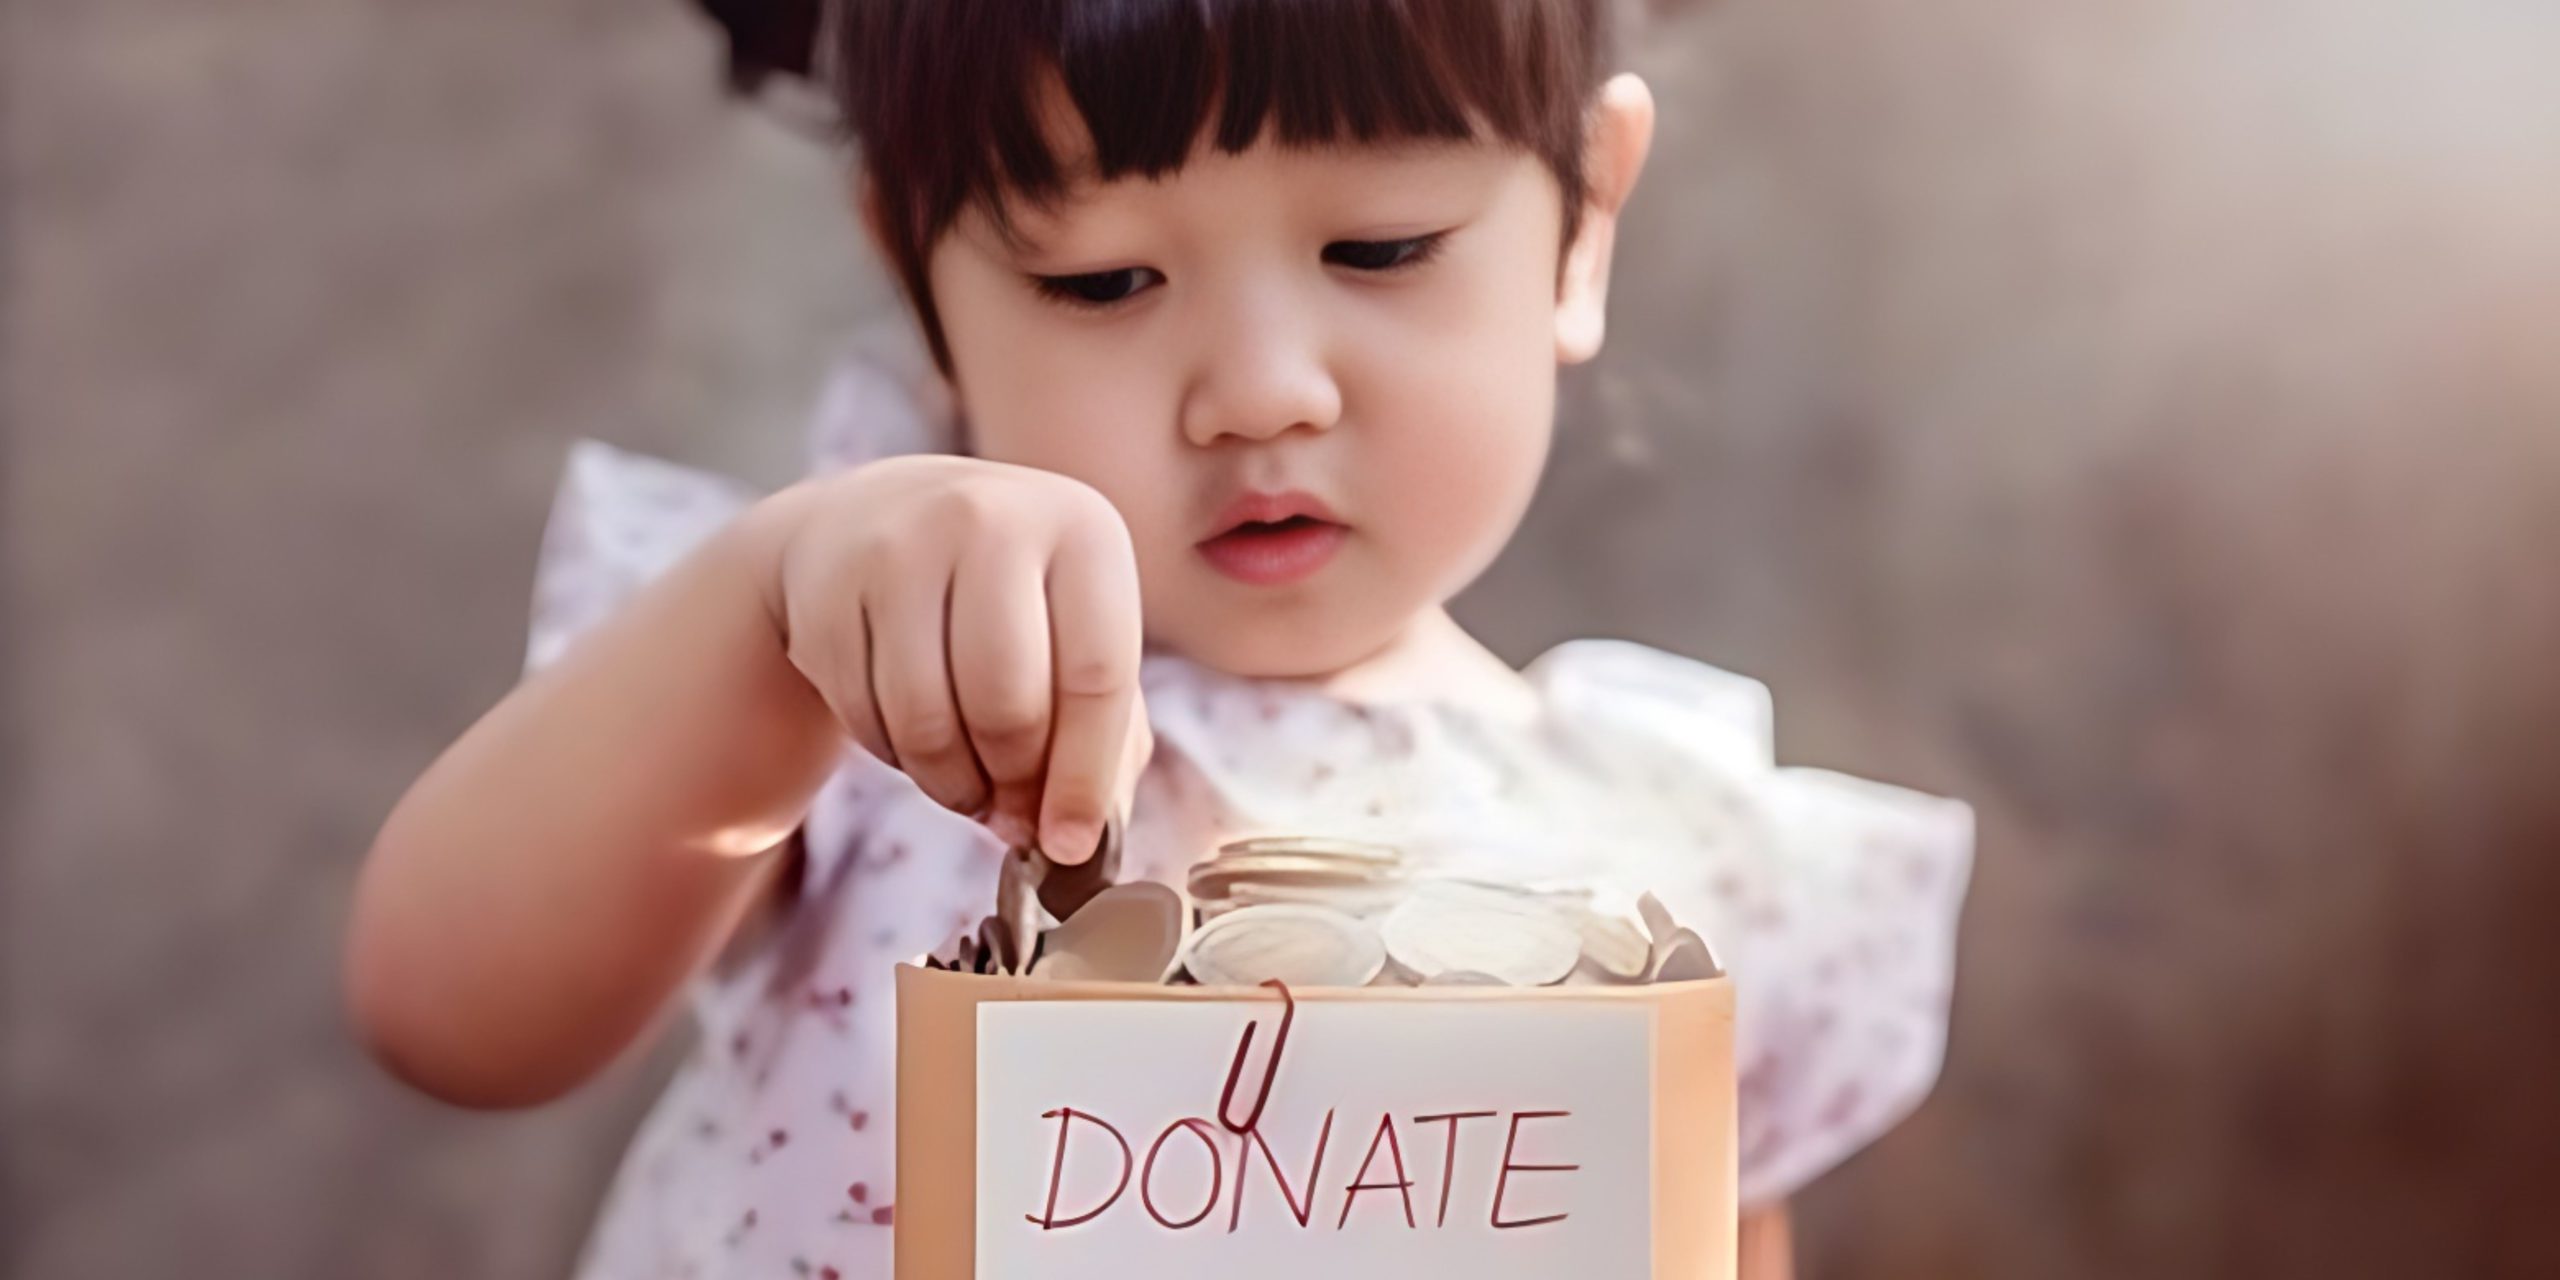 Children’s Day: How to instil the habit of giving in kids